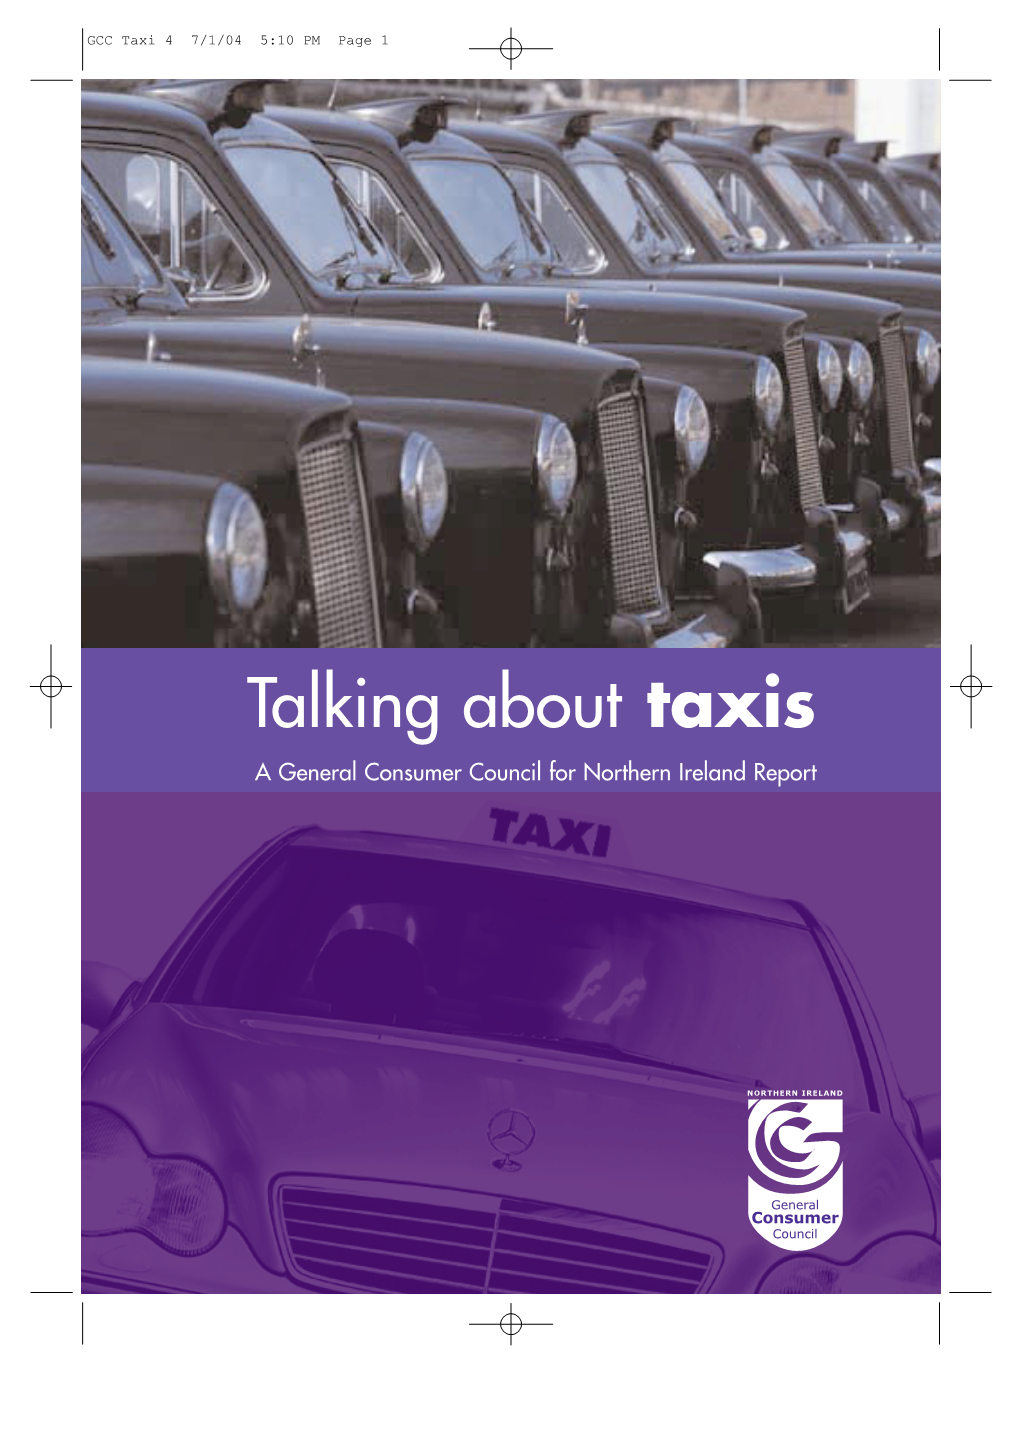 GCC Taxi 4 7/1/04 5:10 PM Page 1